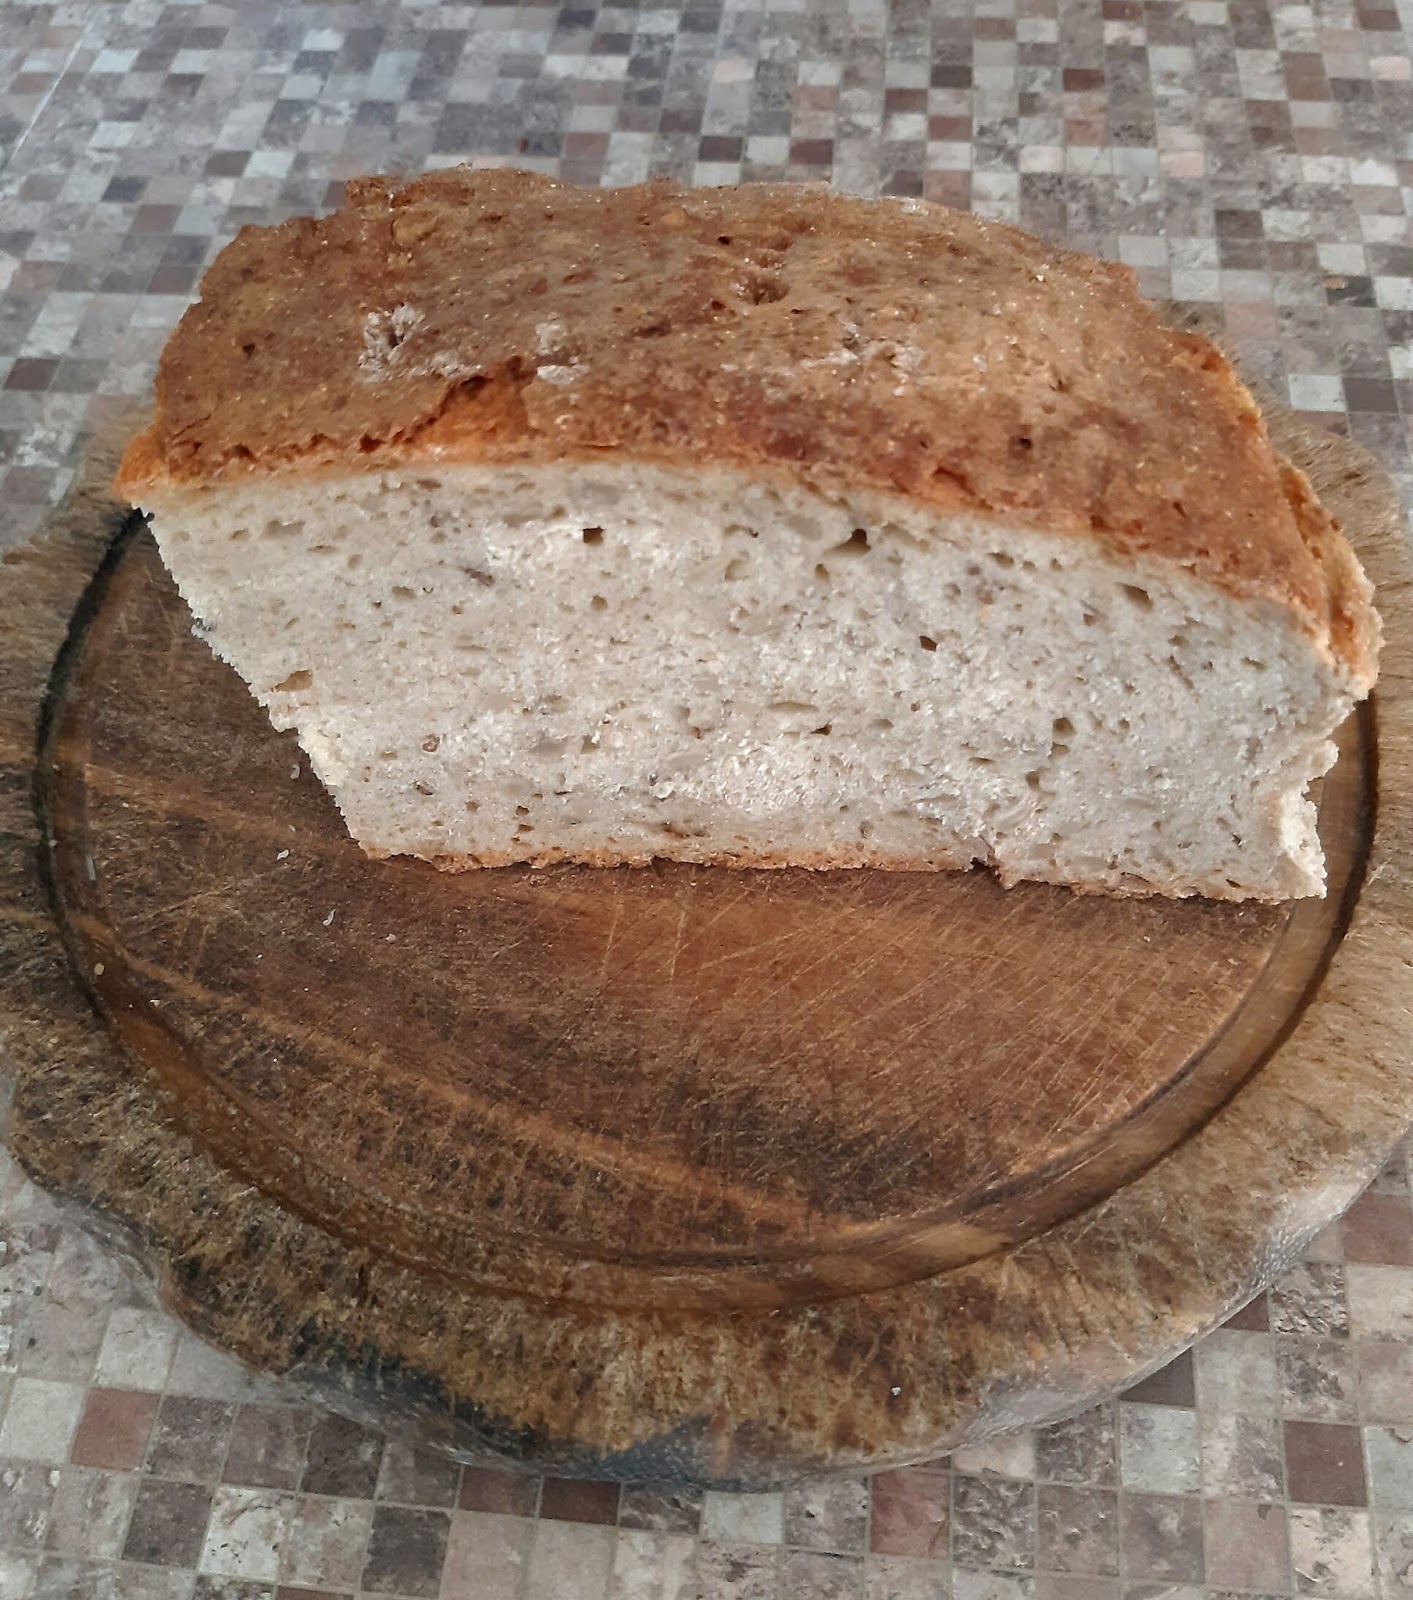 Ackerbau in Pankow: Brot